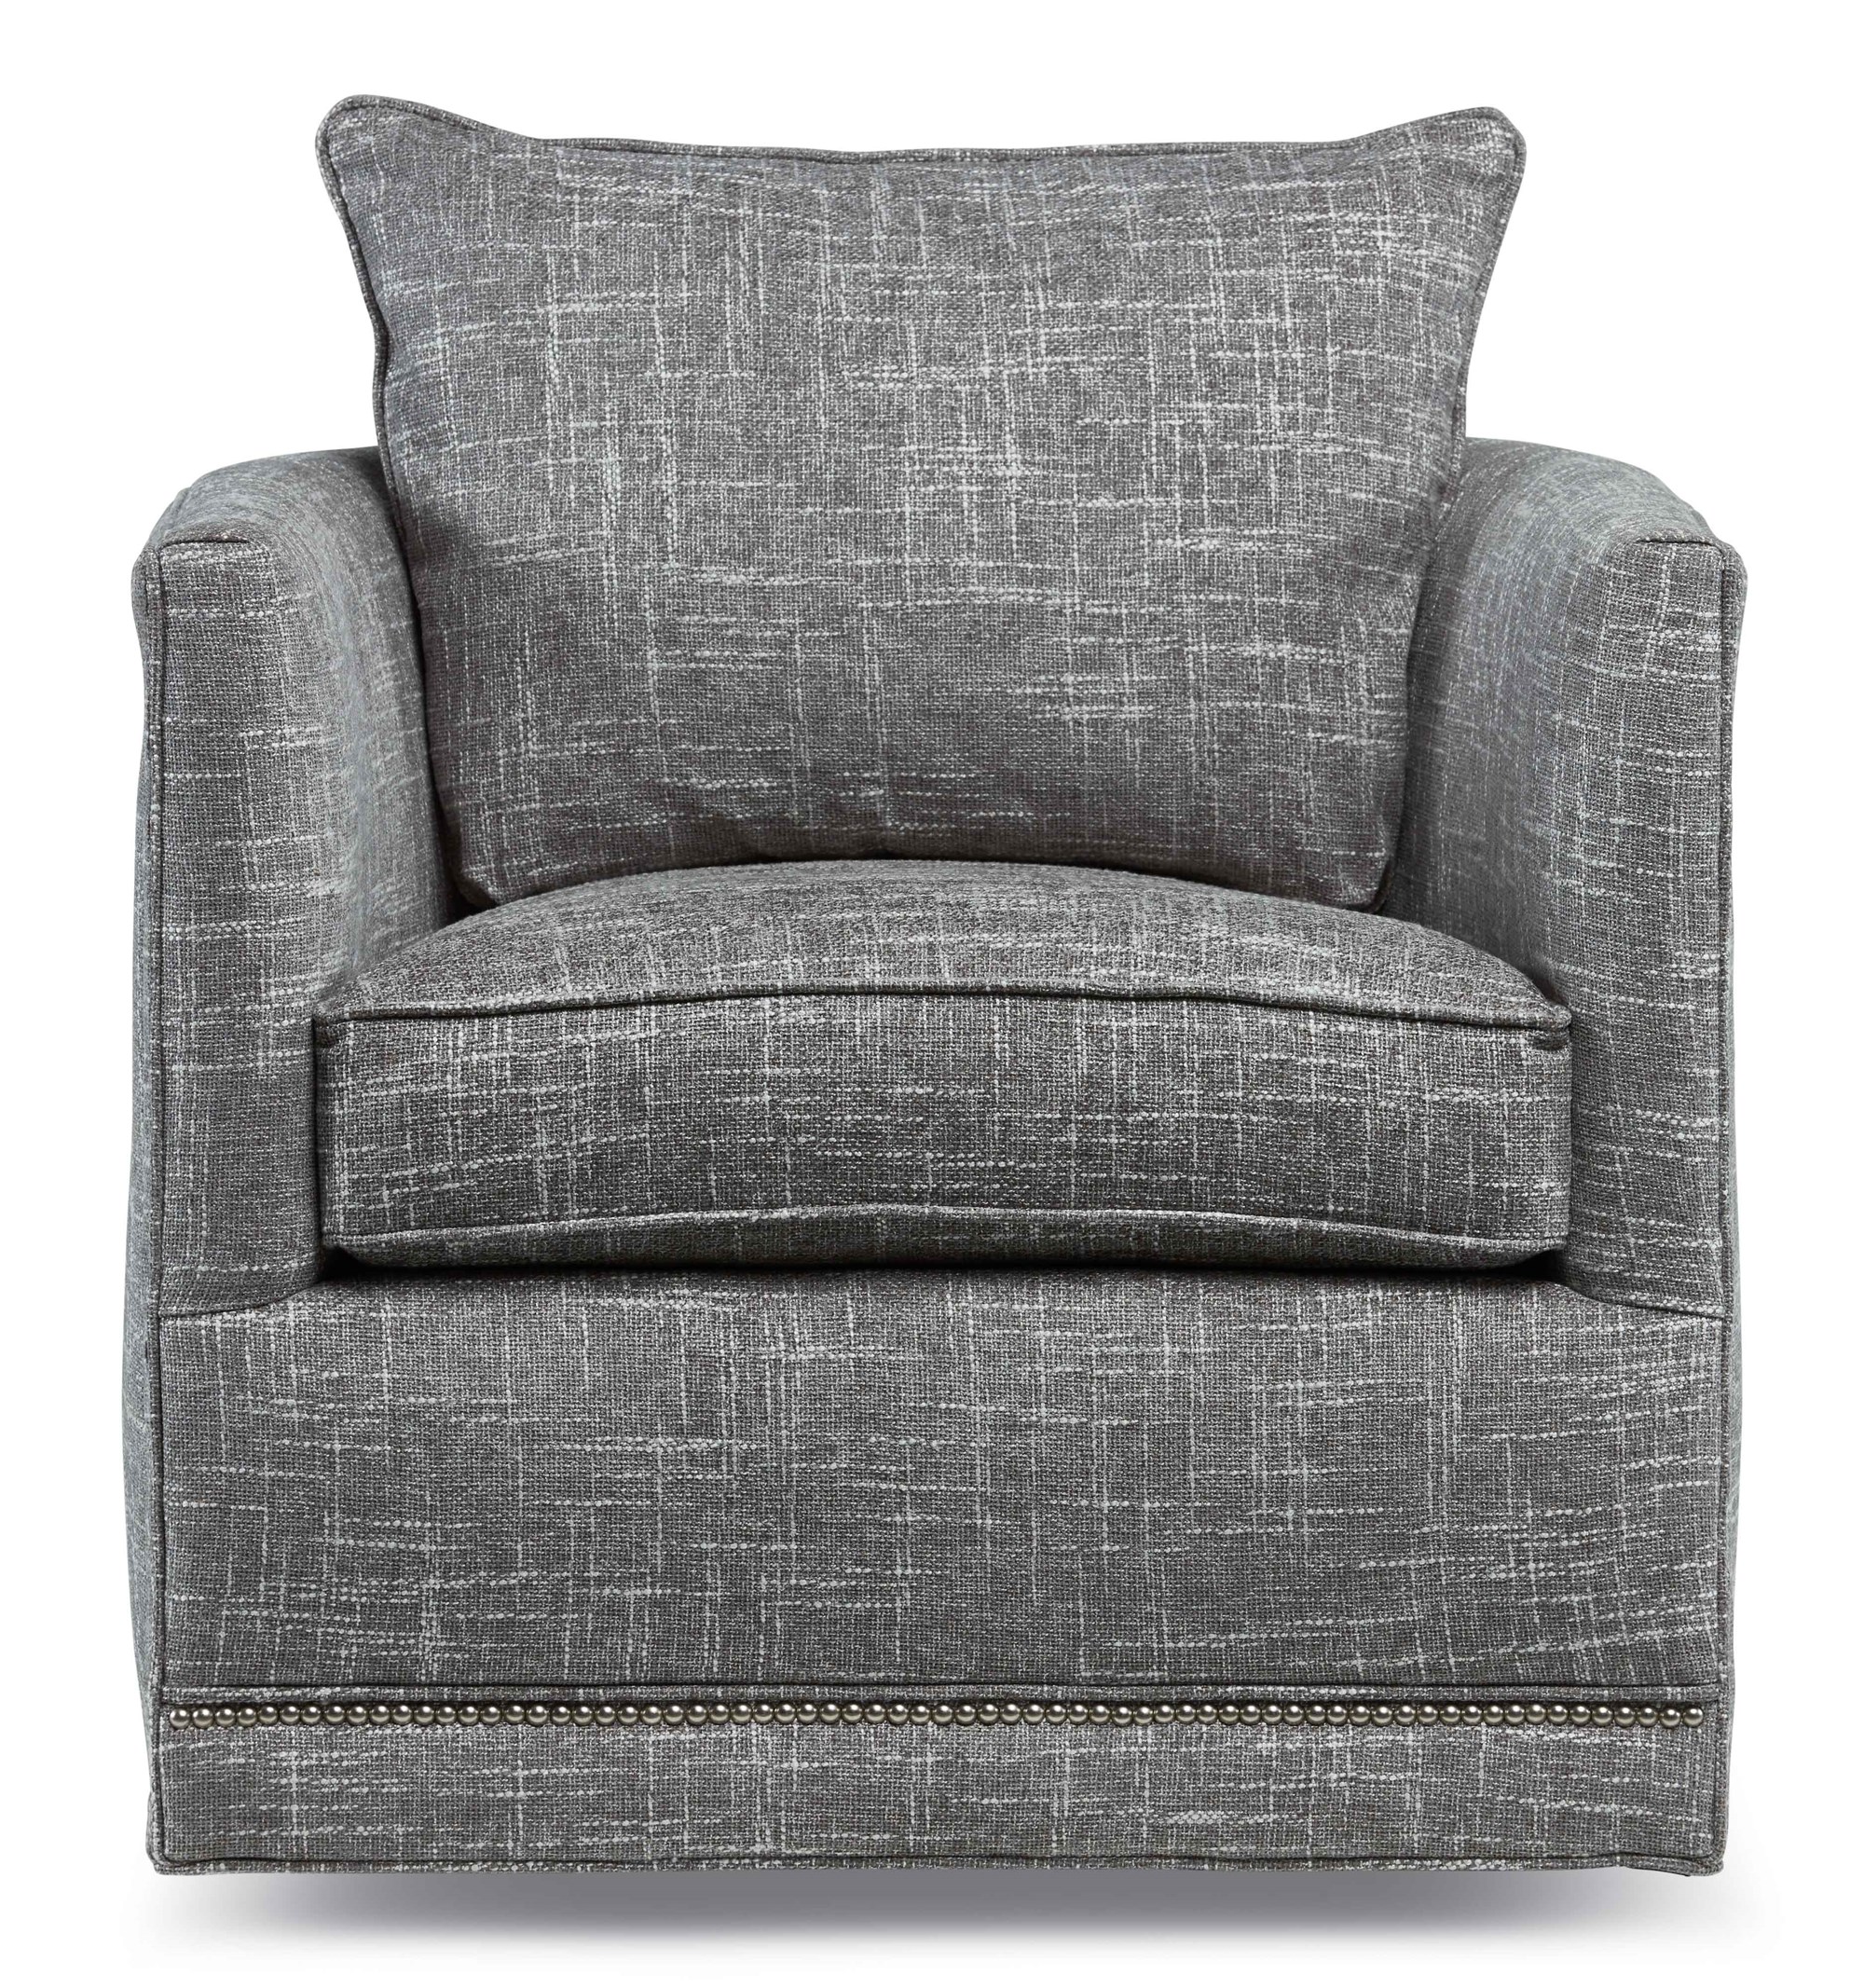 & Aura Robb Swivel chairs | Stucky Chair living furnishings room : : : hf chaises hooker &